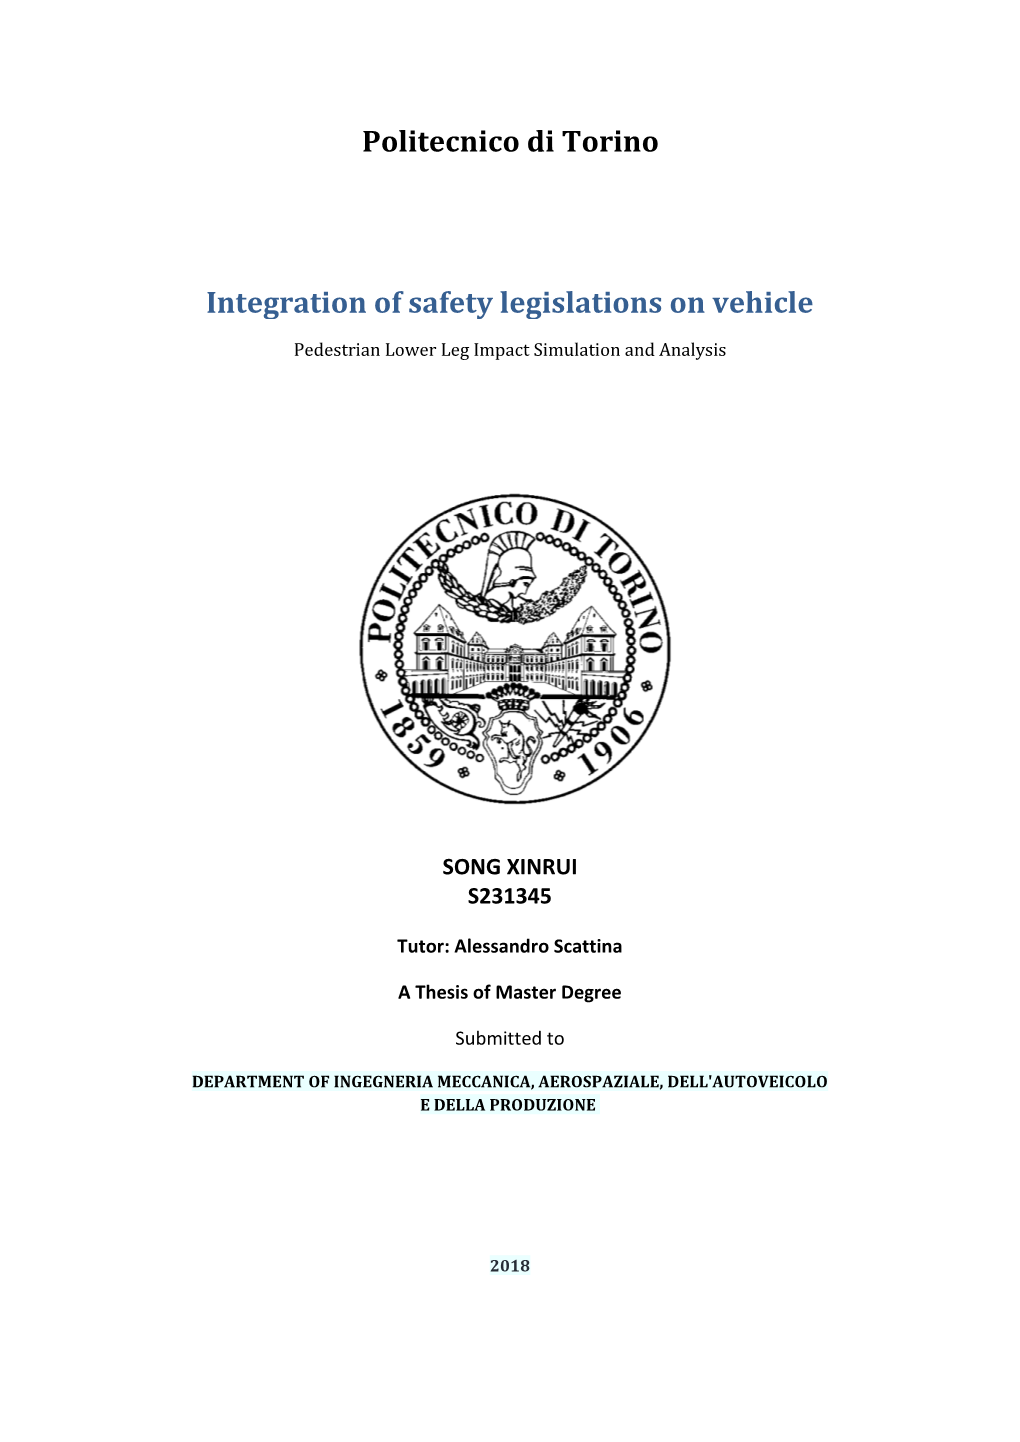 Integration of Safety Legislations on Vehicle Pedestrian Lower Leg Impact Simulation and Analysis